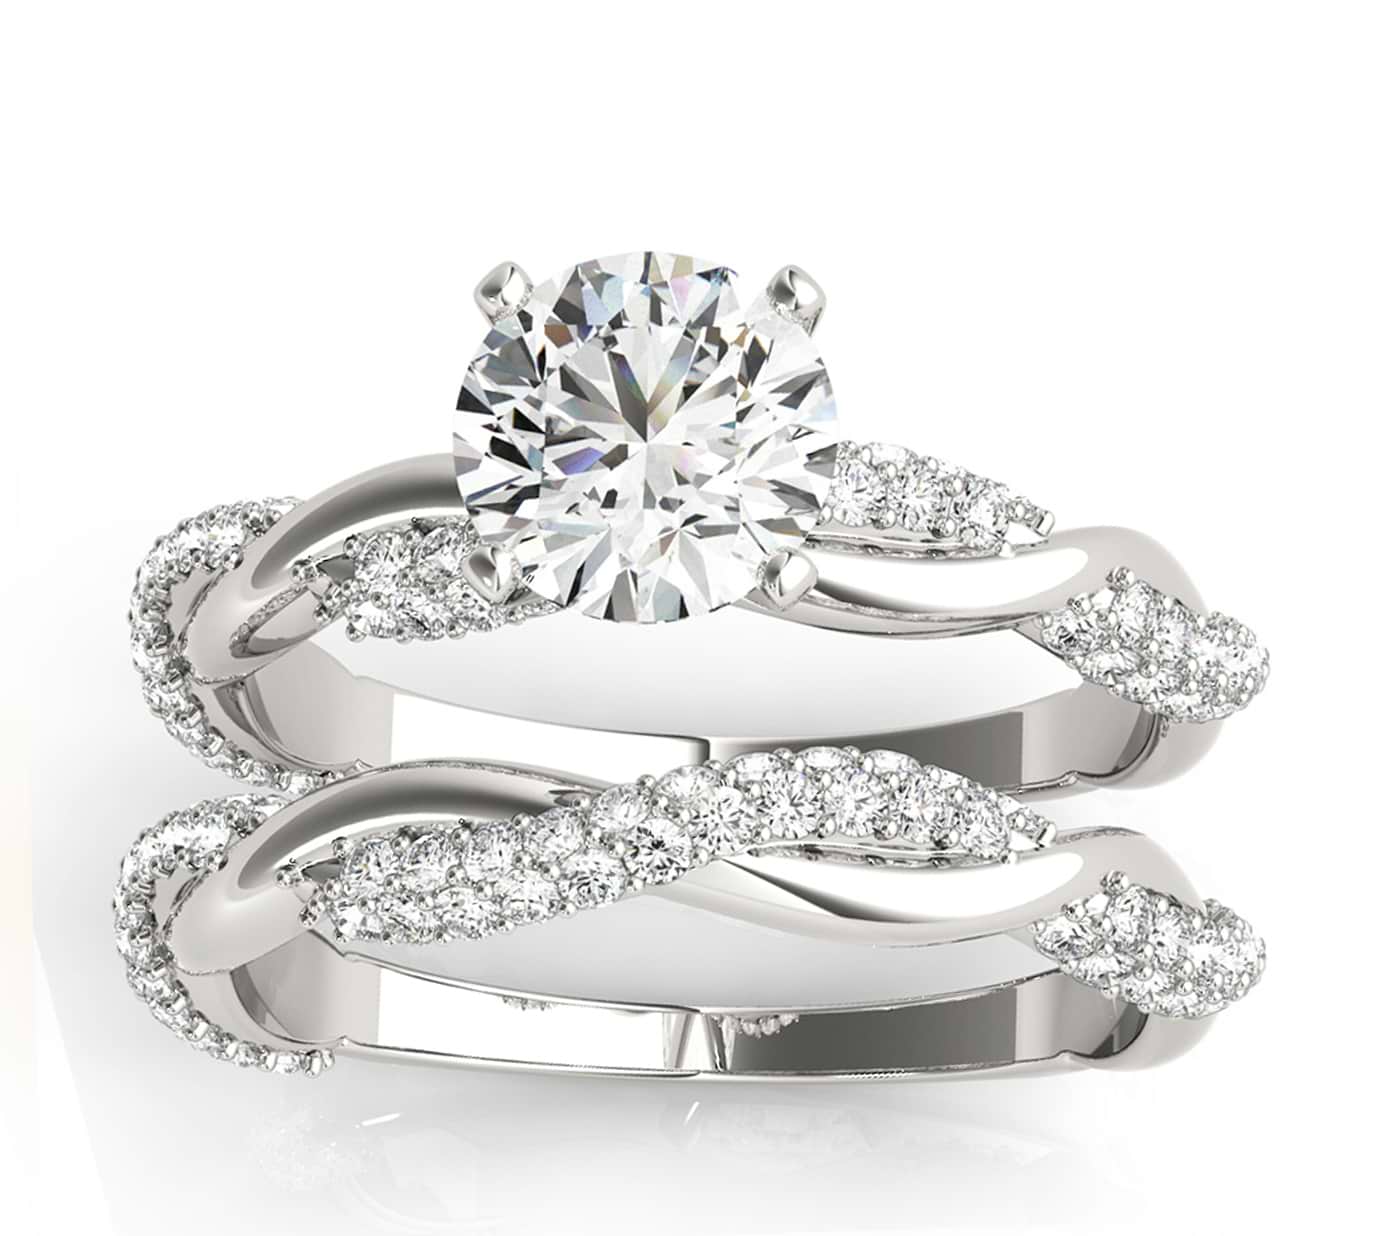 Infinity Twist Diamond Bridal Ring Set Setting Platinum (0.80 ct)